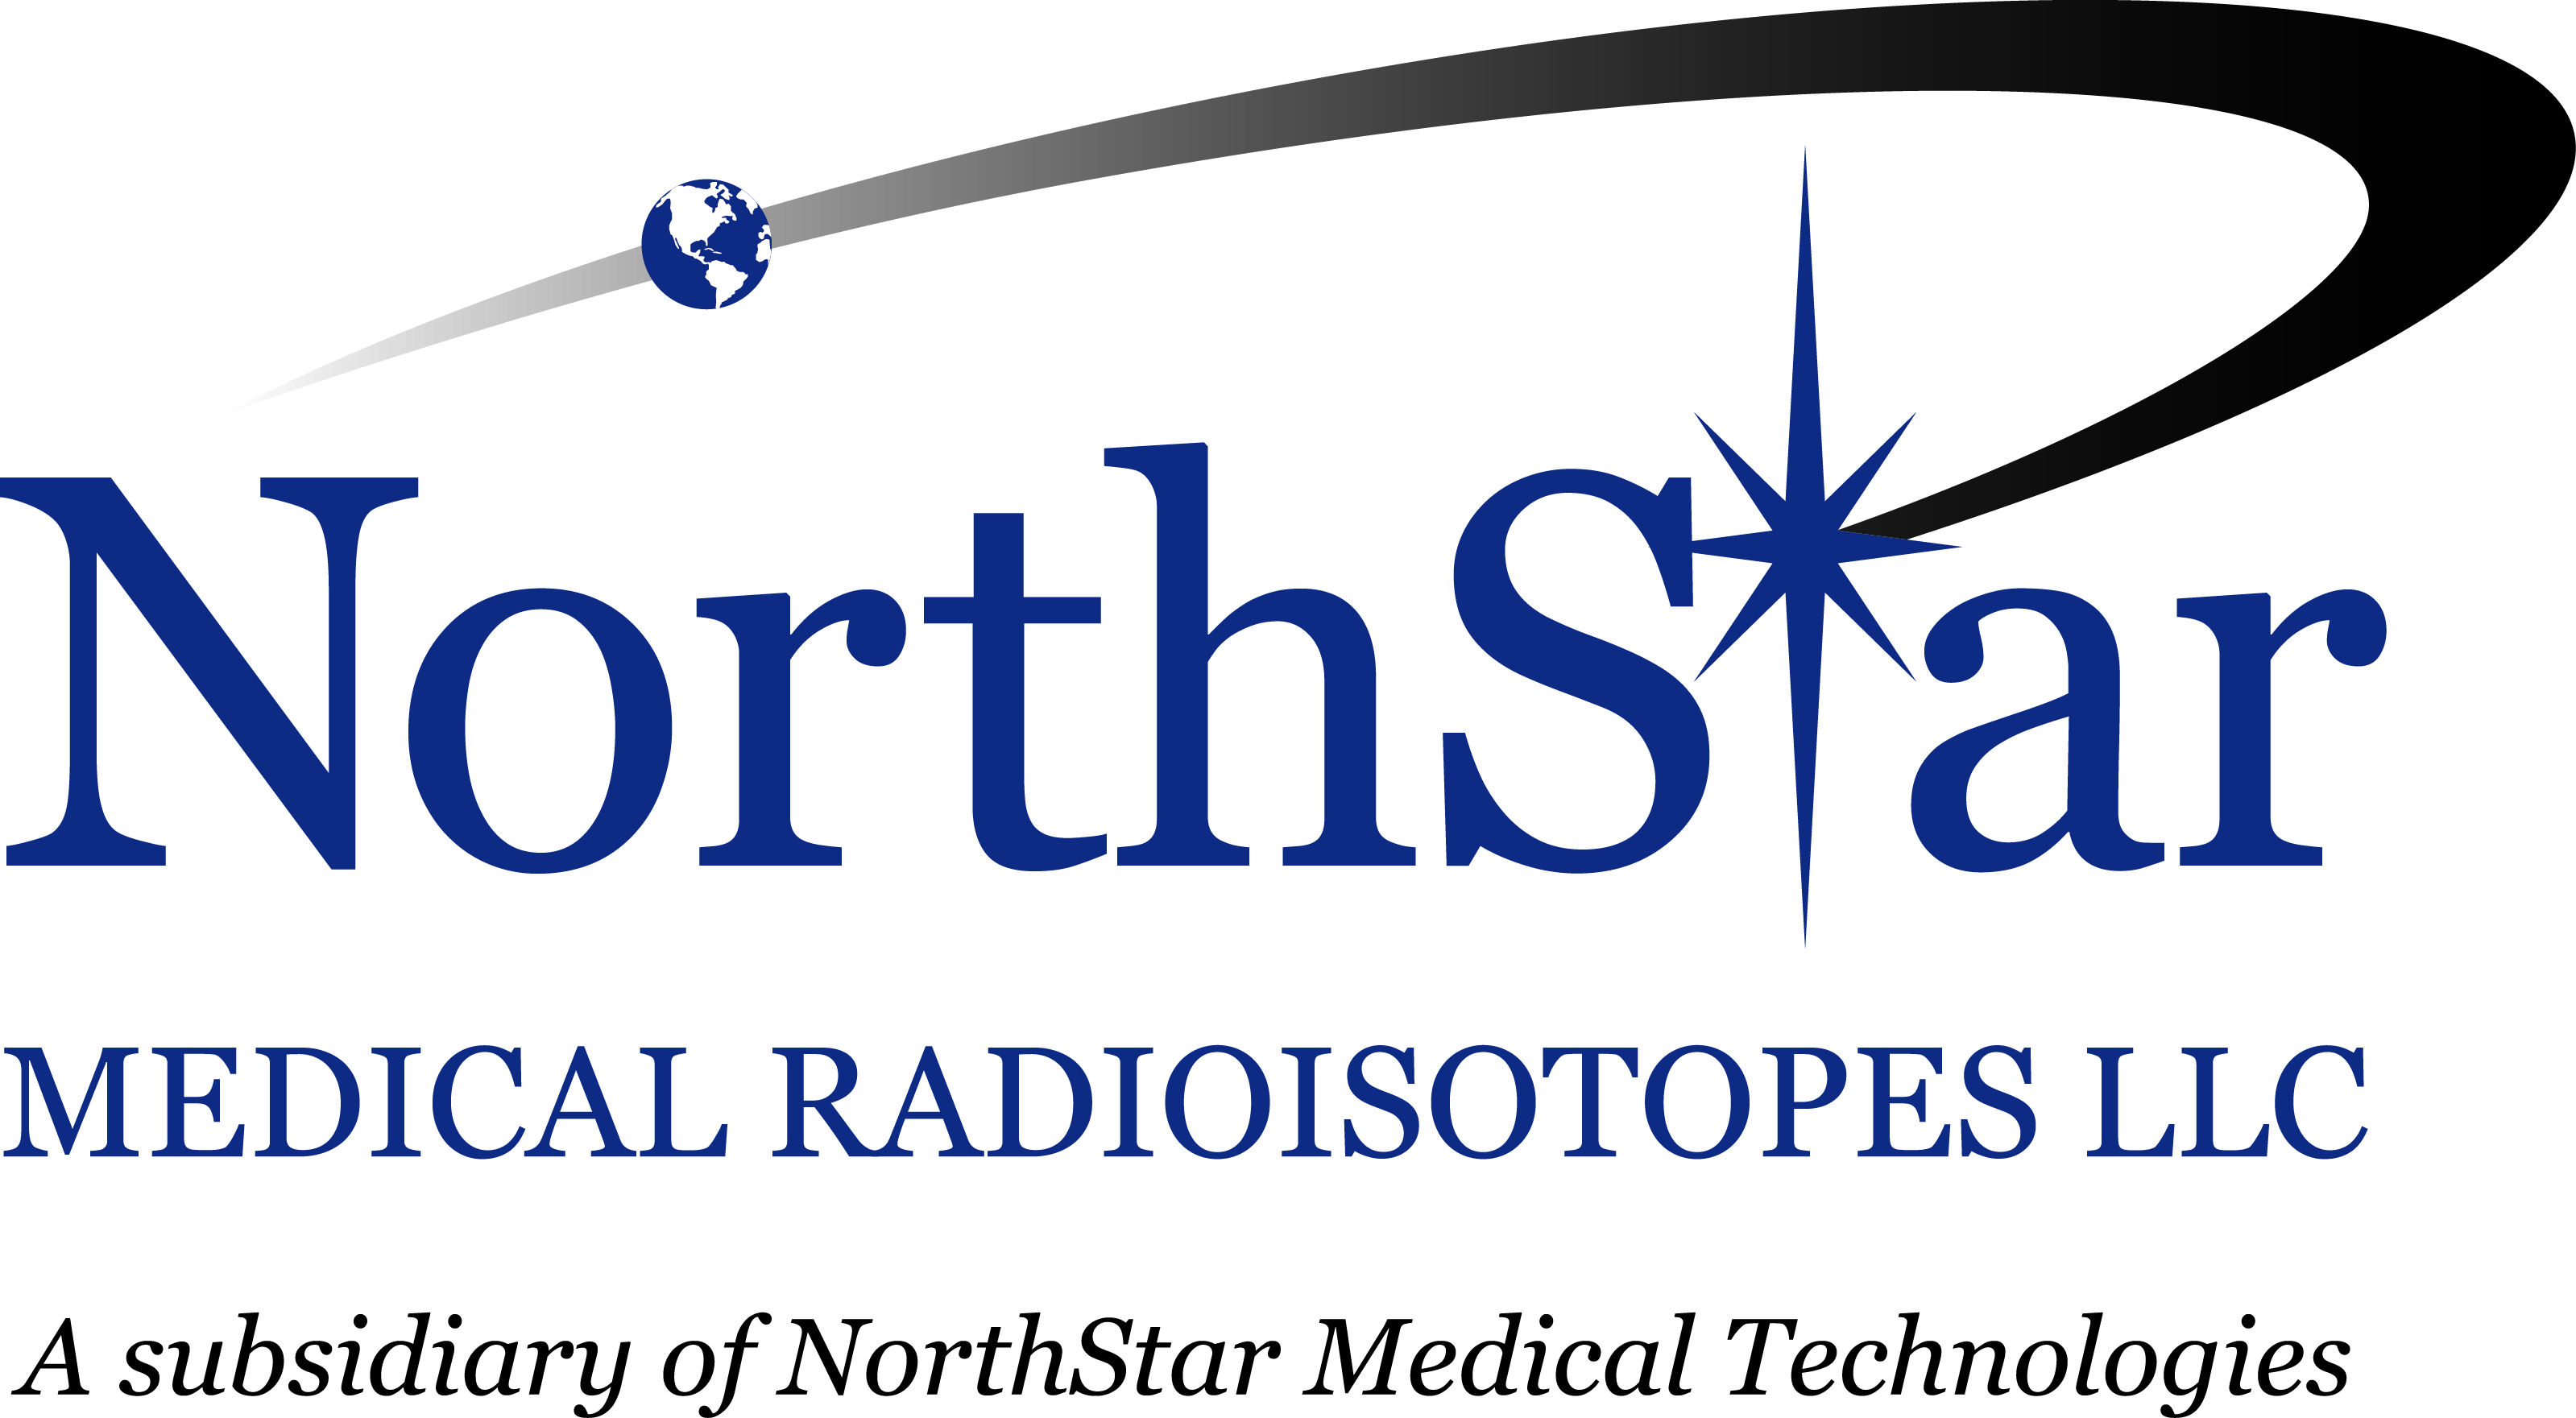 Northstar Medical Technologies